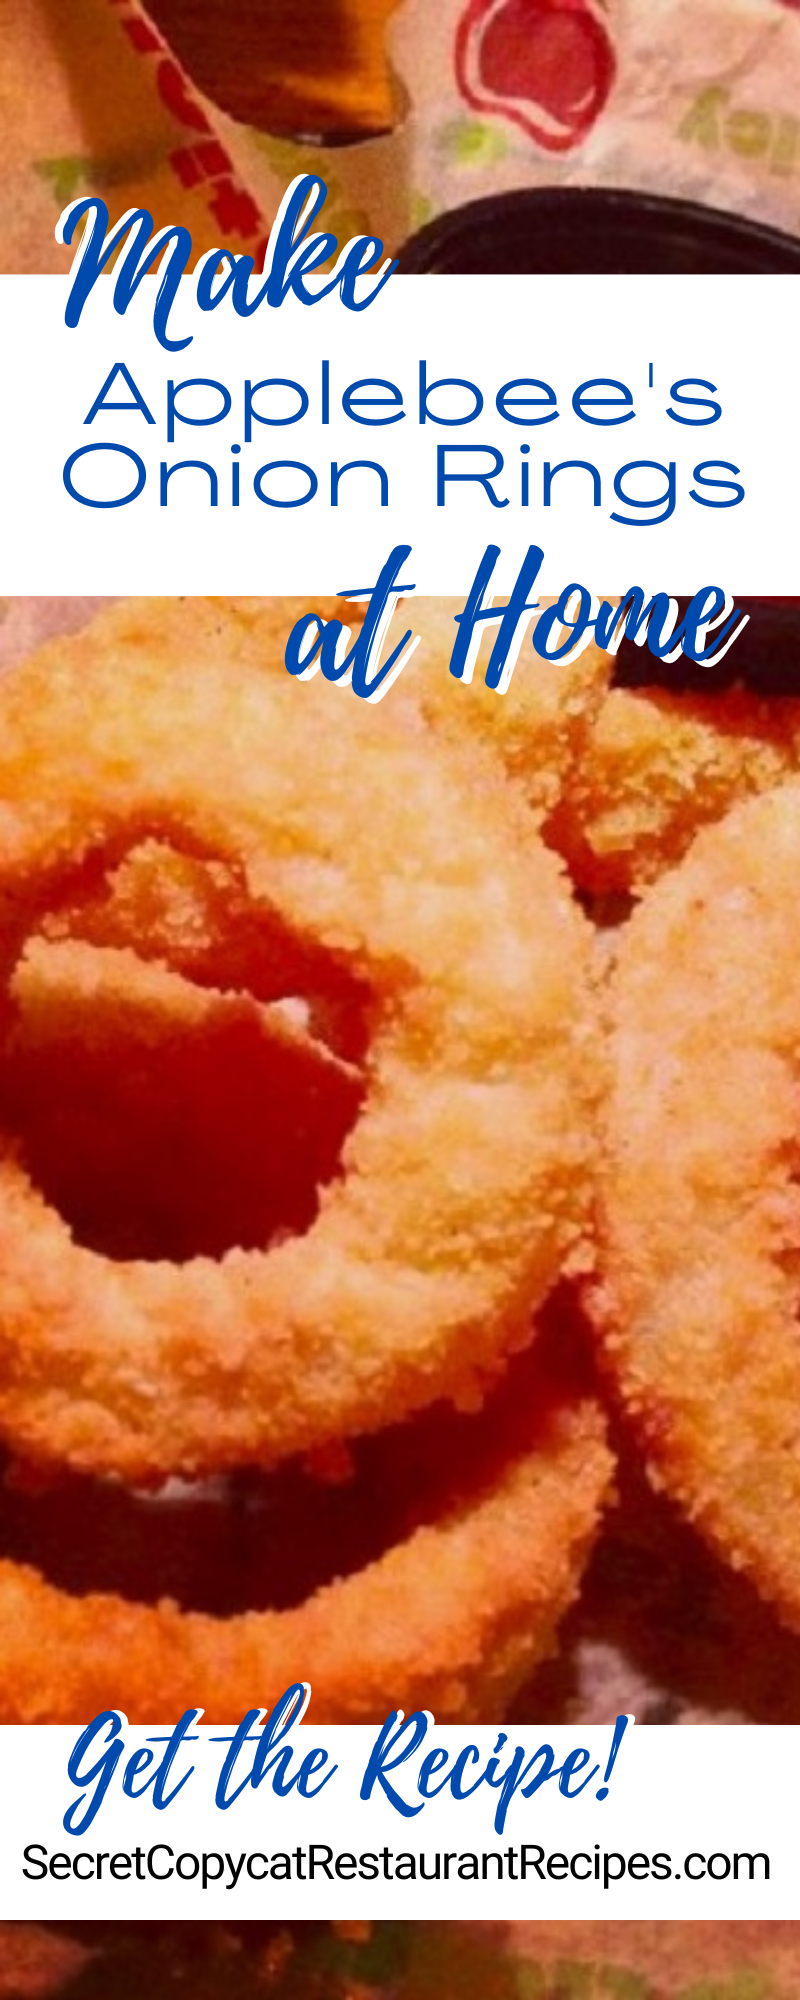 Applebee's Onion Rings Recipe